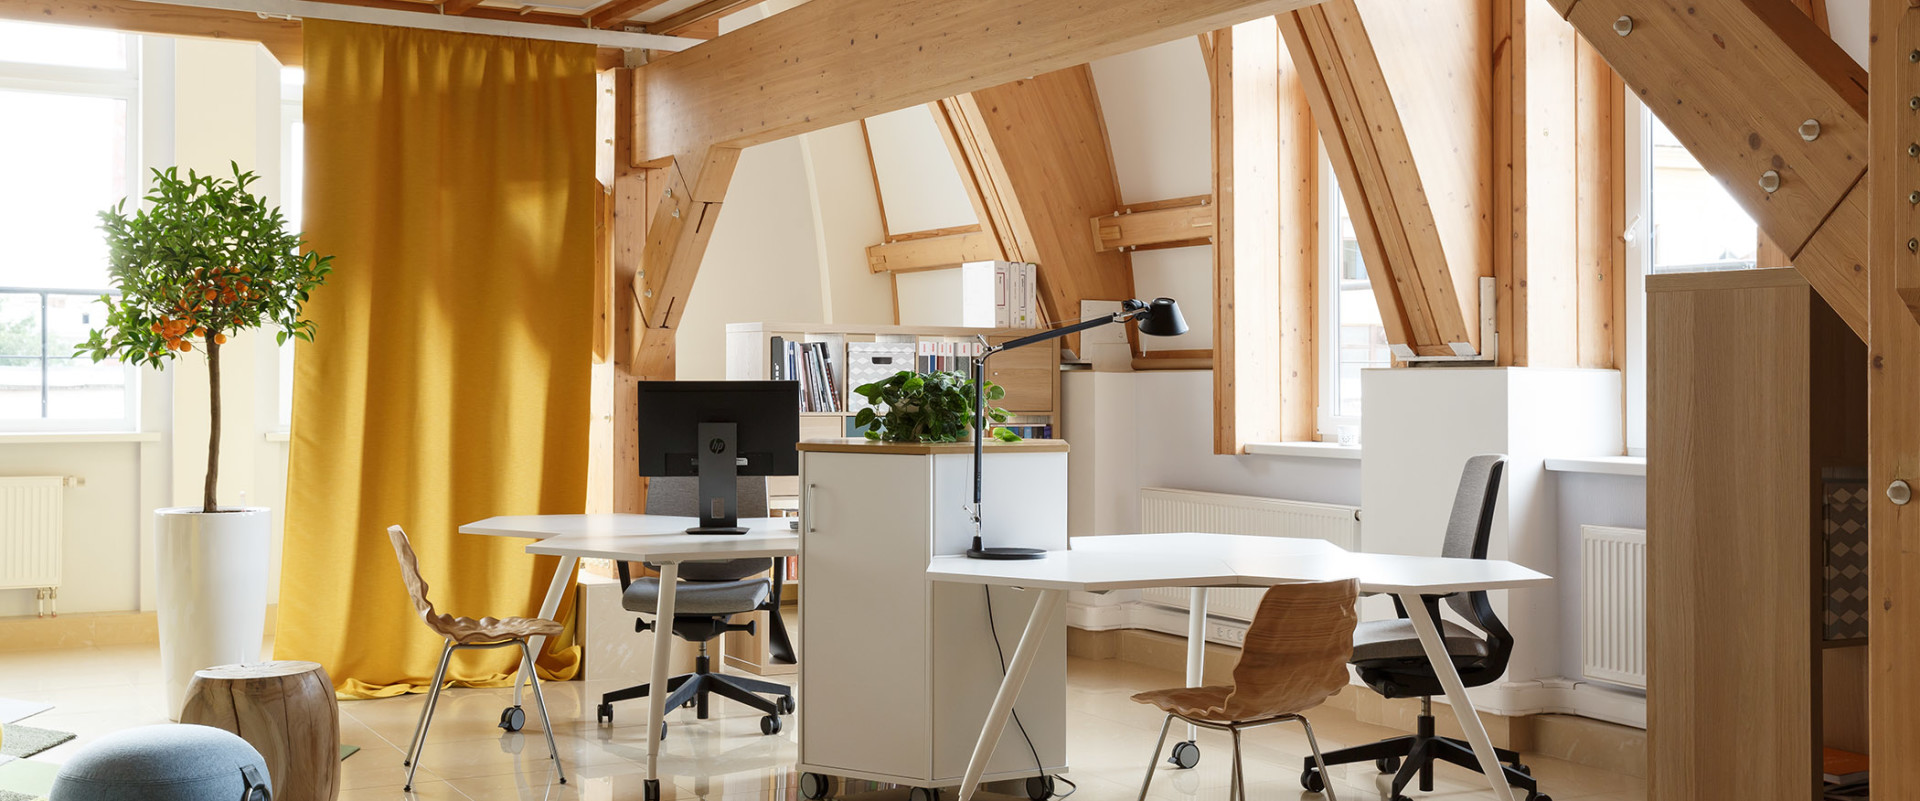 Designic: Nordic style office interior 